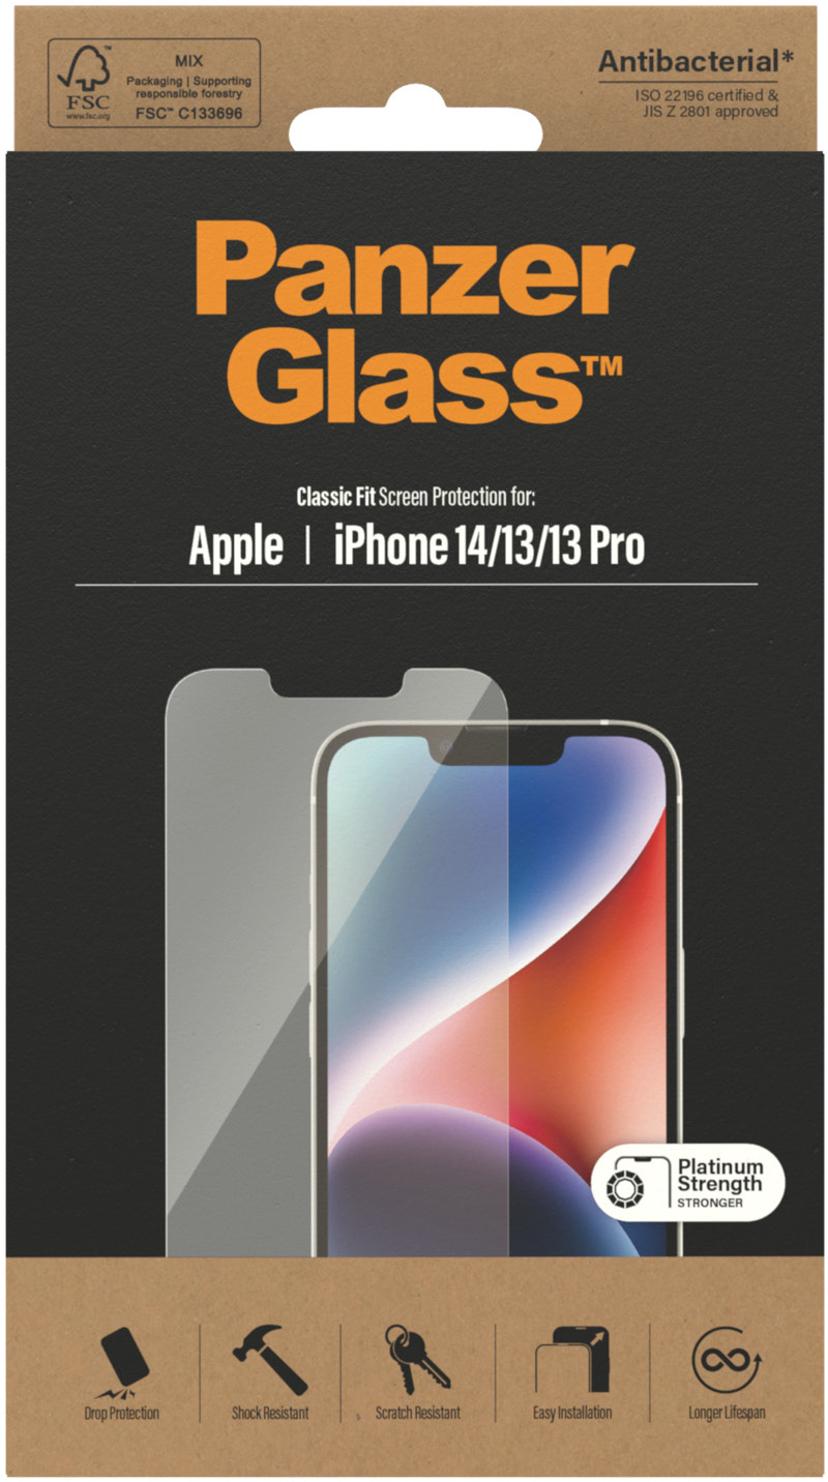 Panzerglass Classic Fit iPhone 13, iPhone 13 Pro, iPhone 14